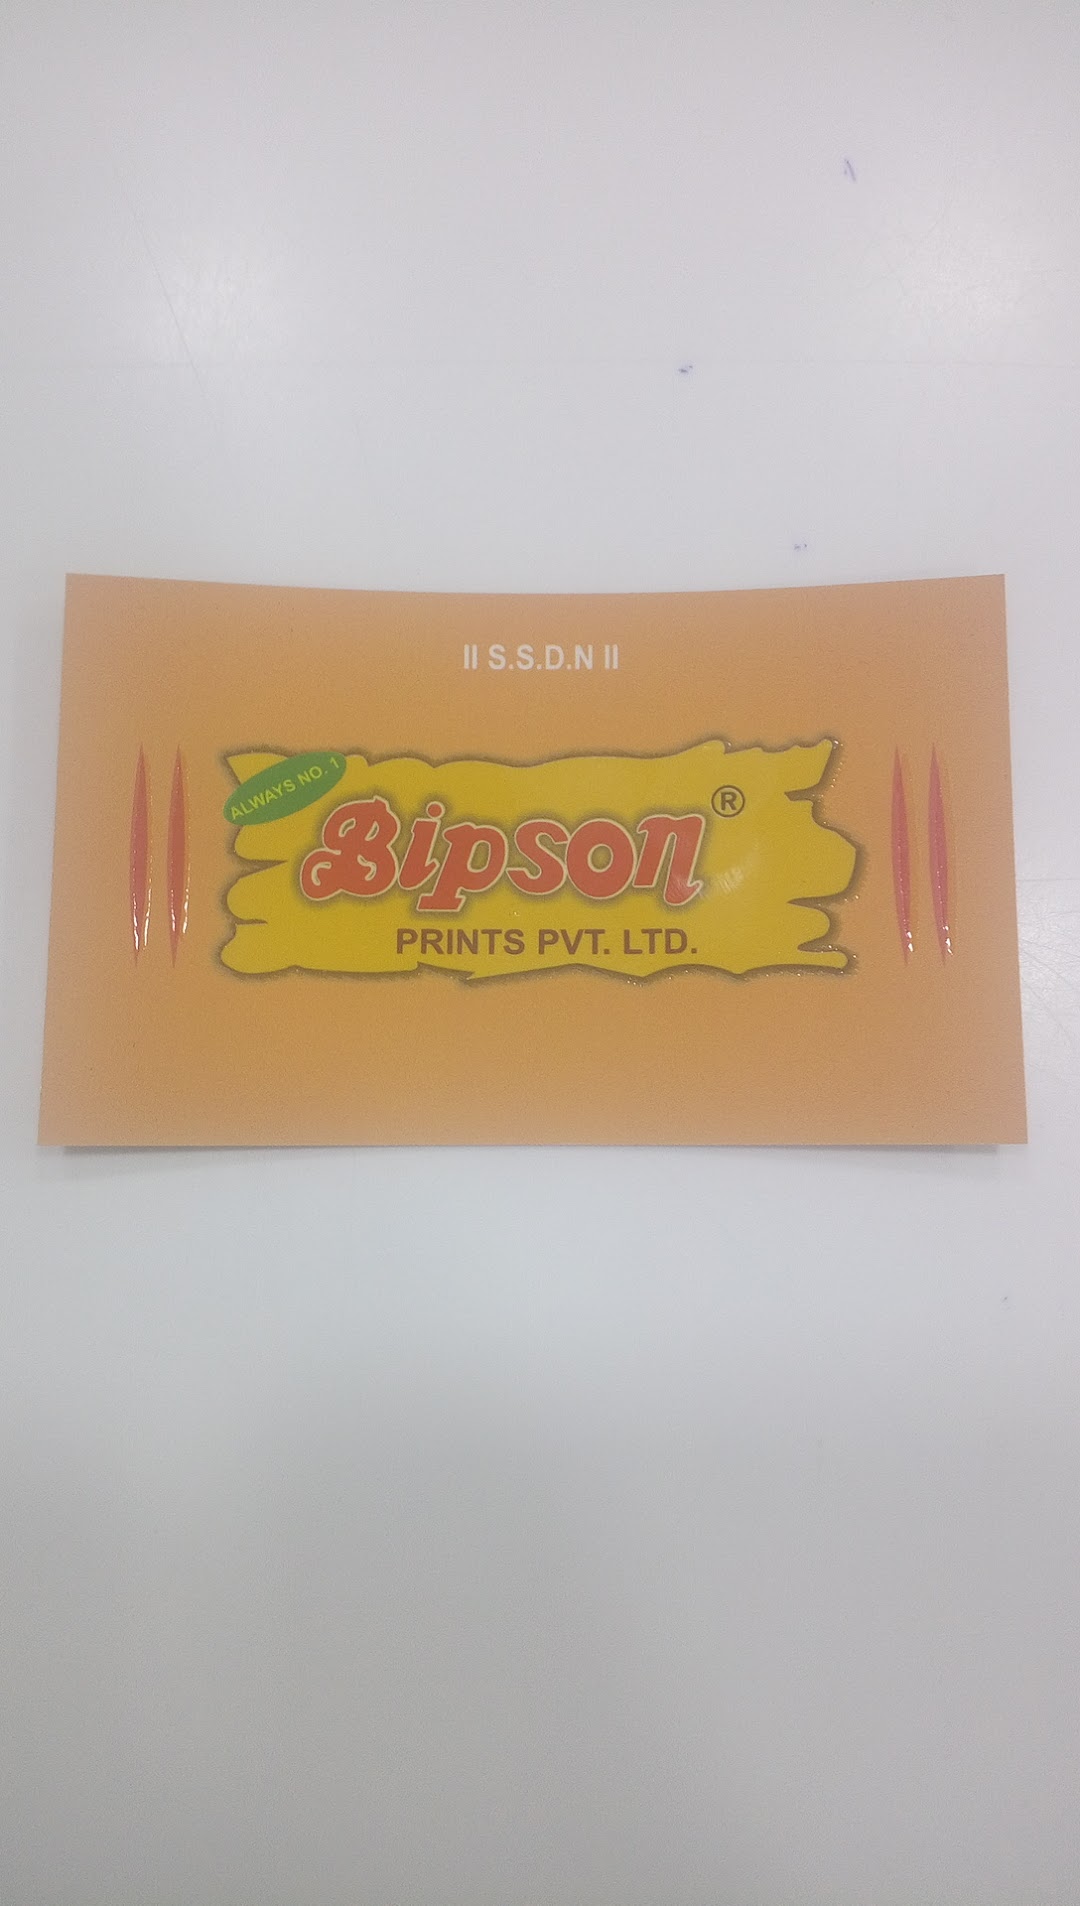 Bipson Prints